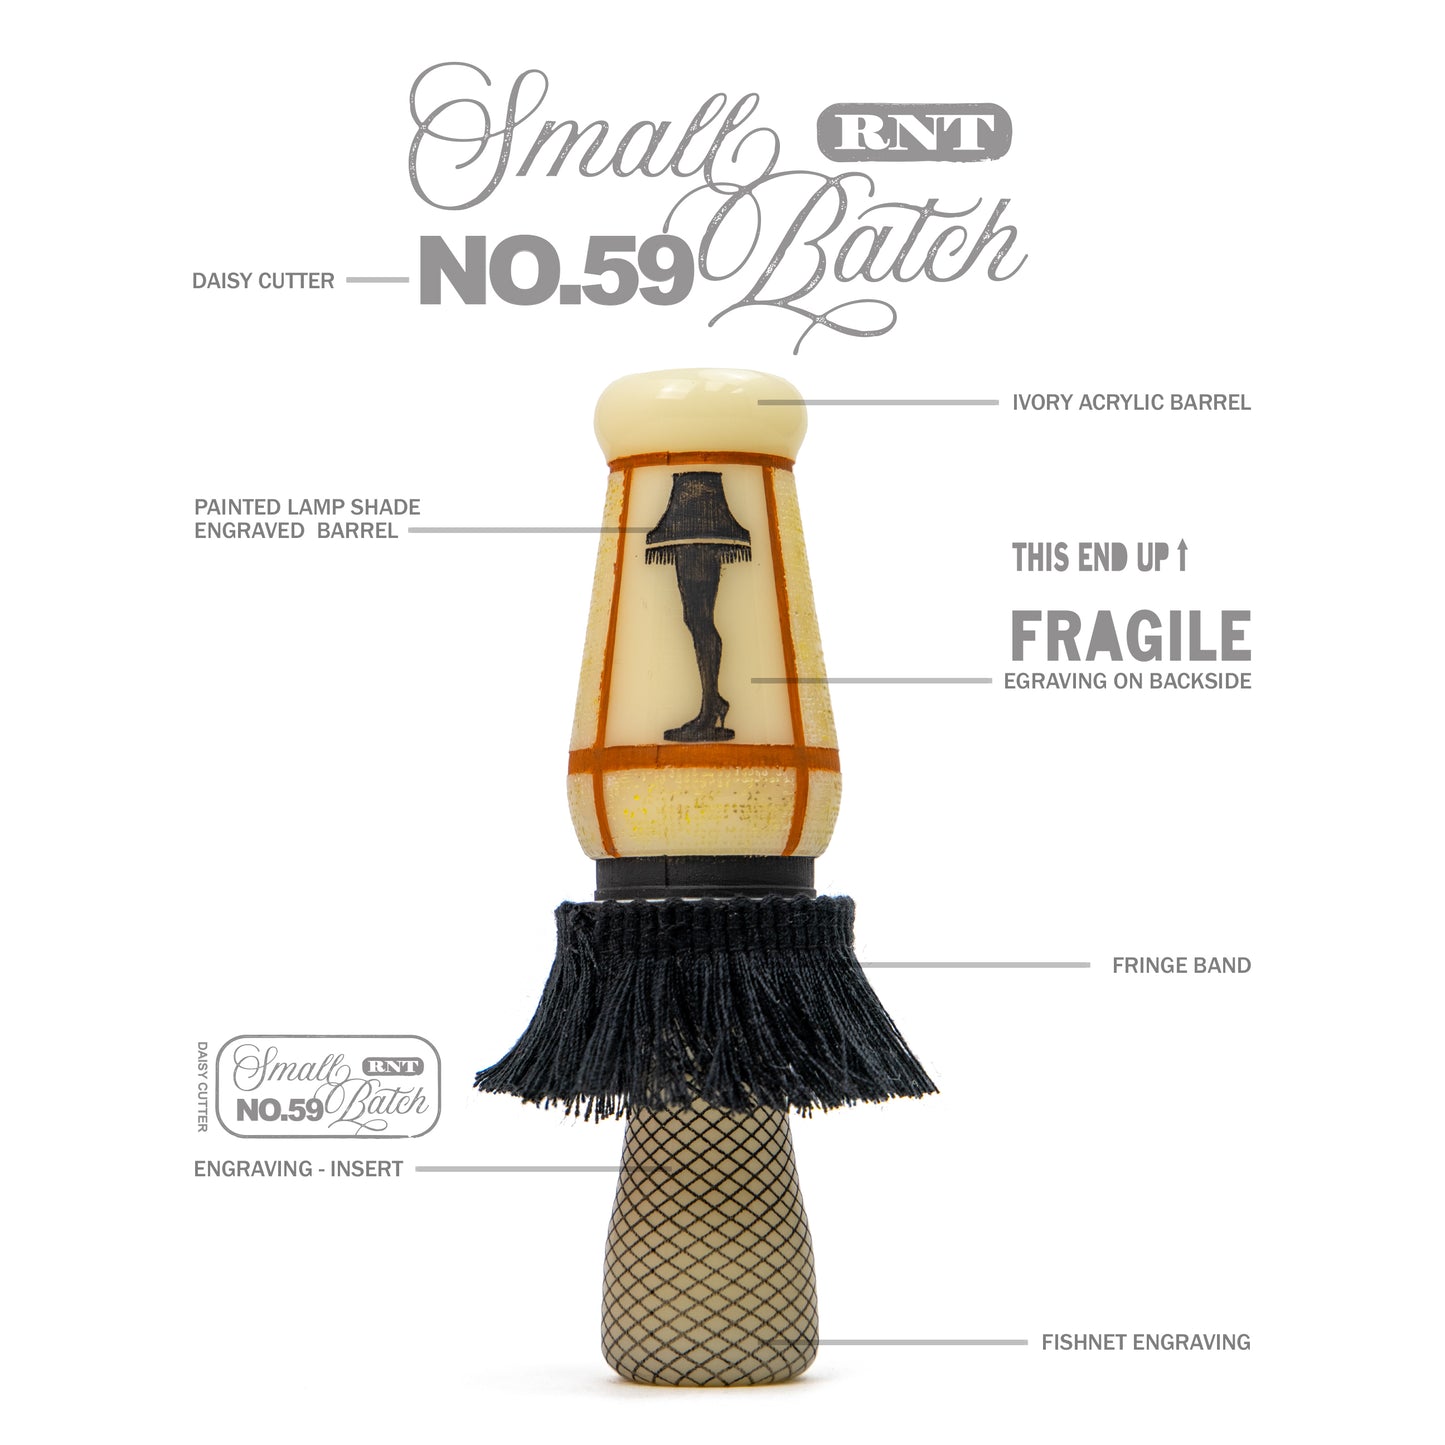 RNT Small Batch No. 59 - Major Award: Leg Lamp Daisy Cutter